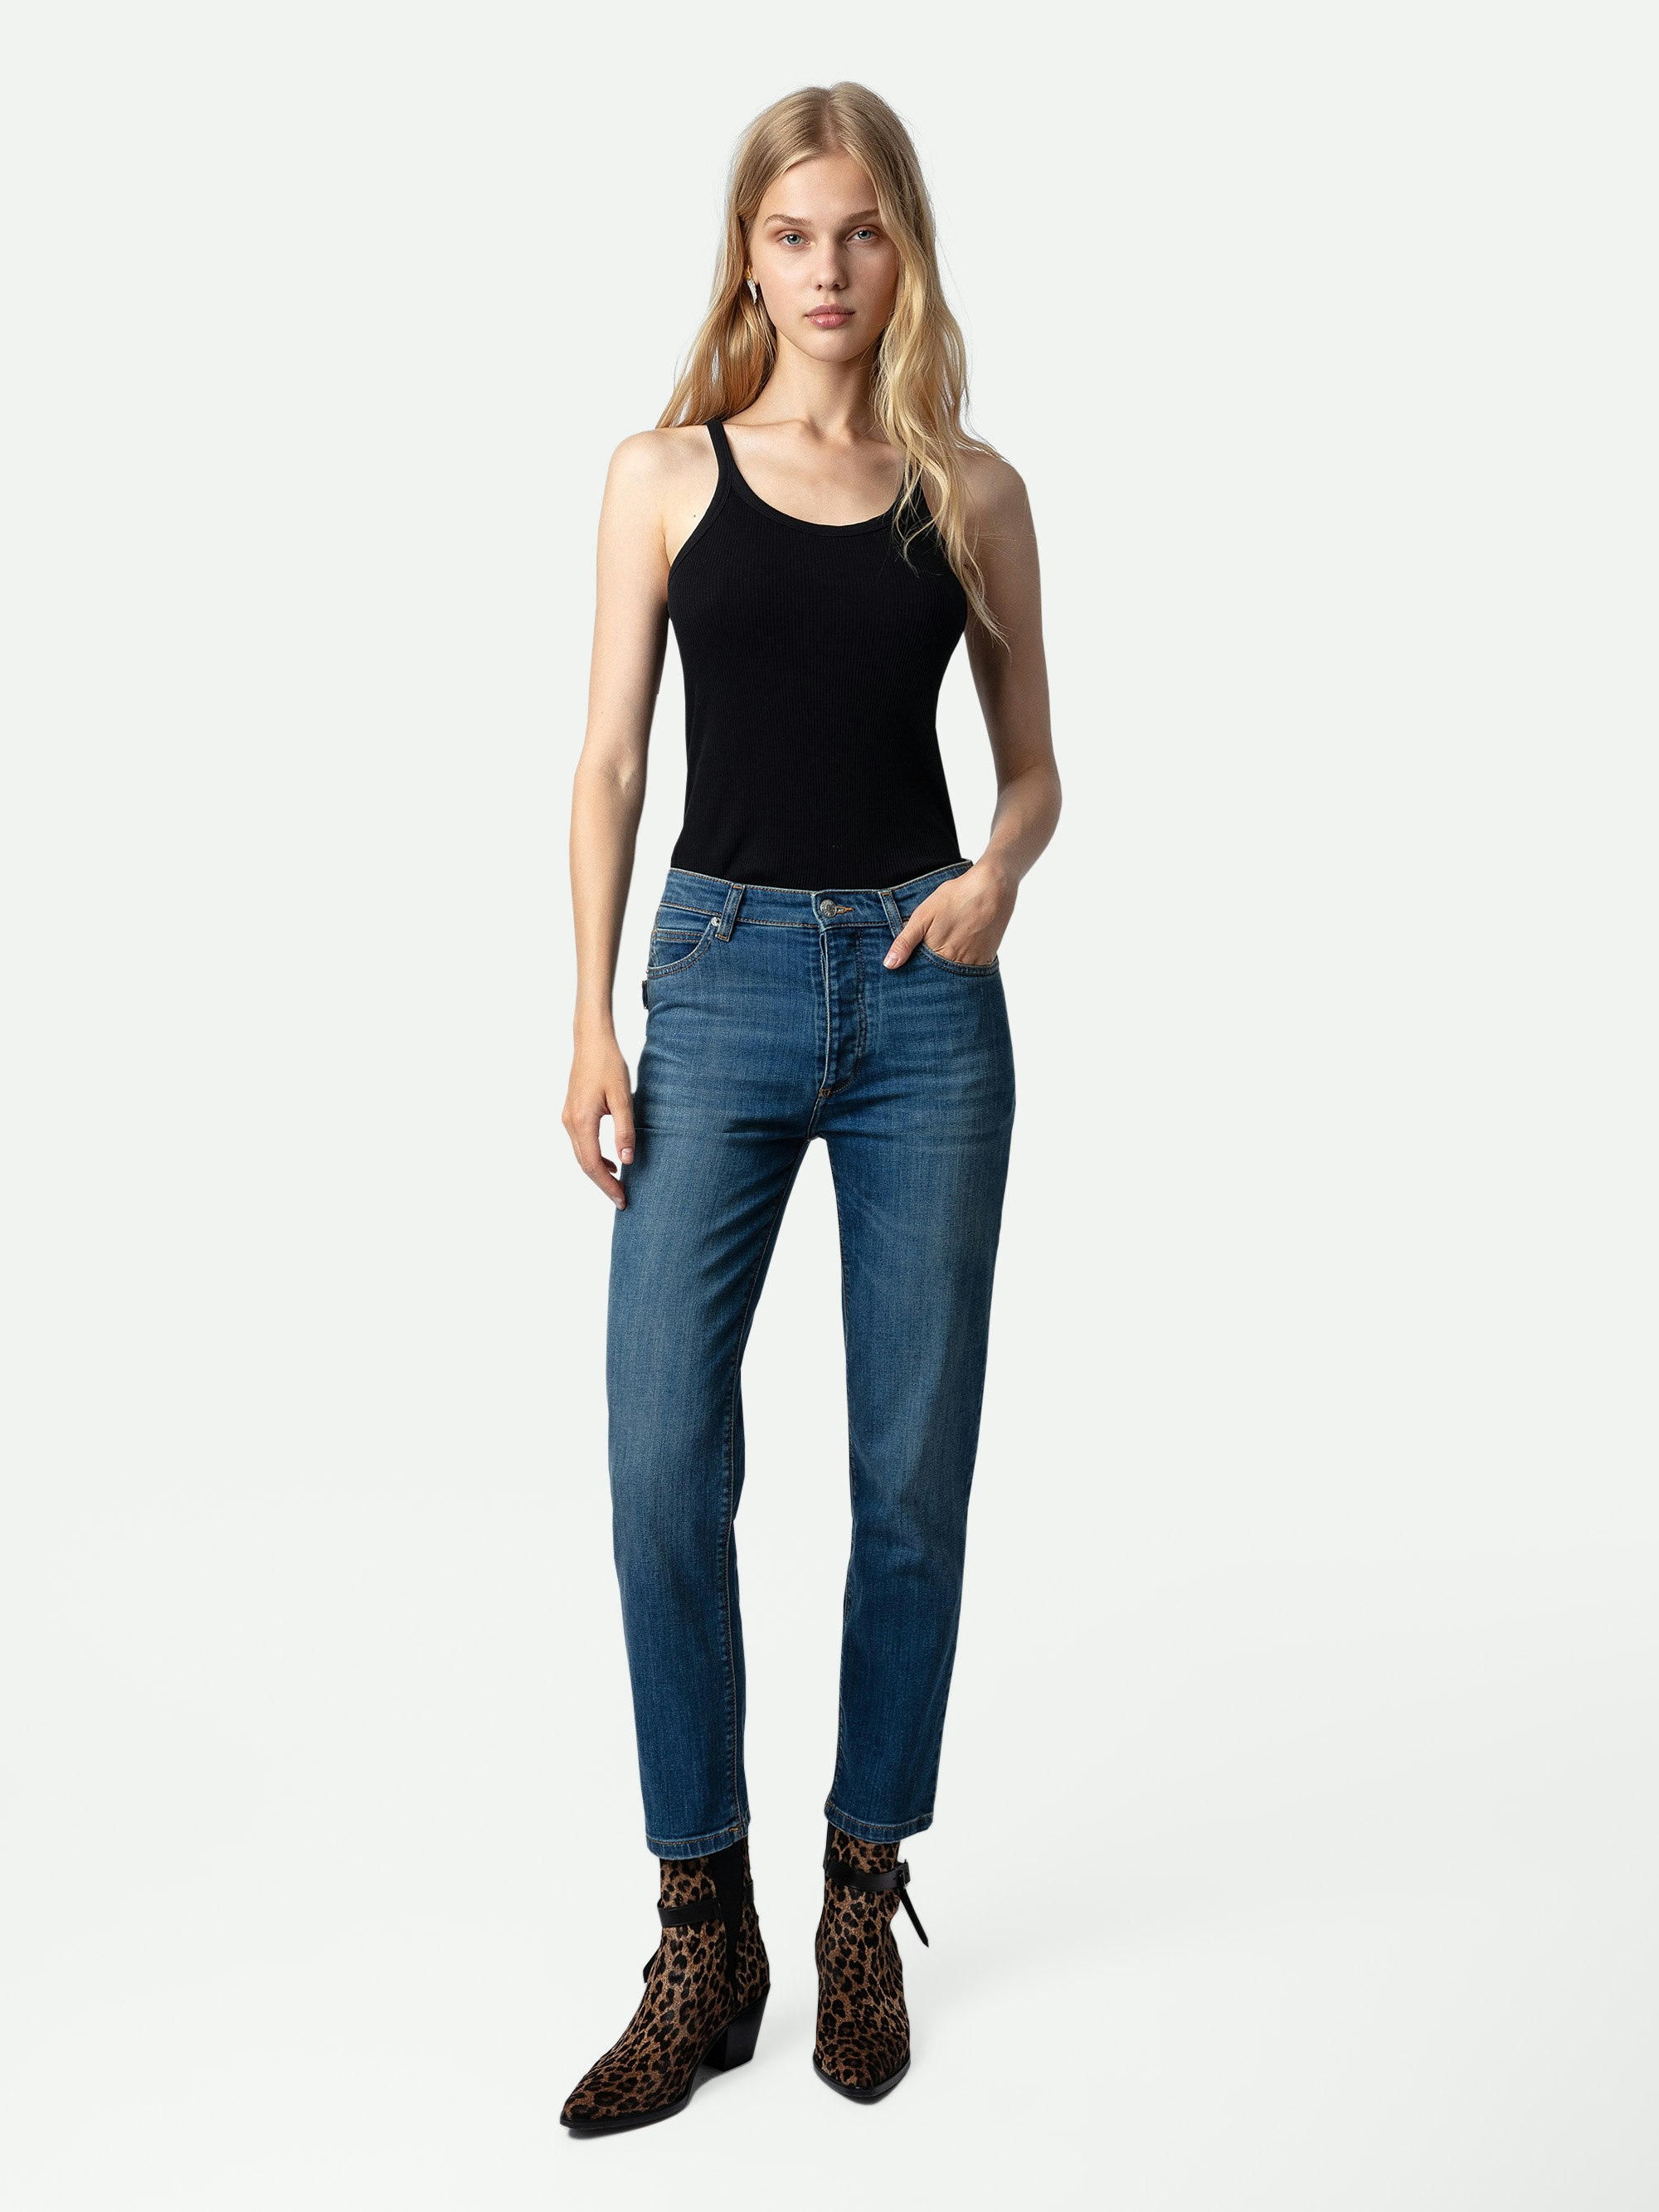 Mamma Jeans - Women’s faded blue cotton jeans.